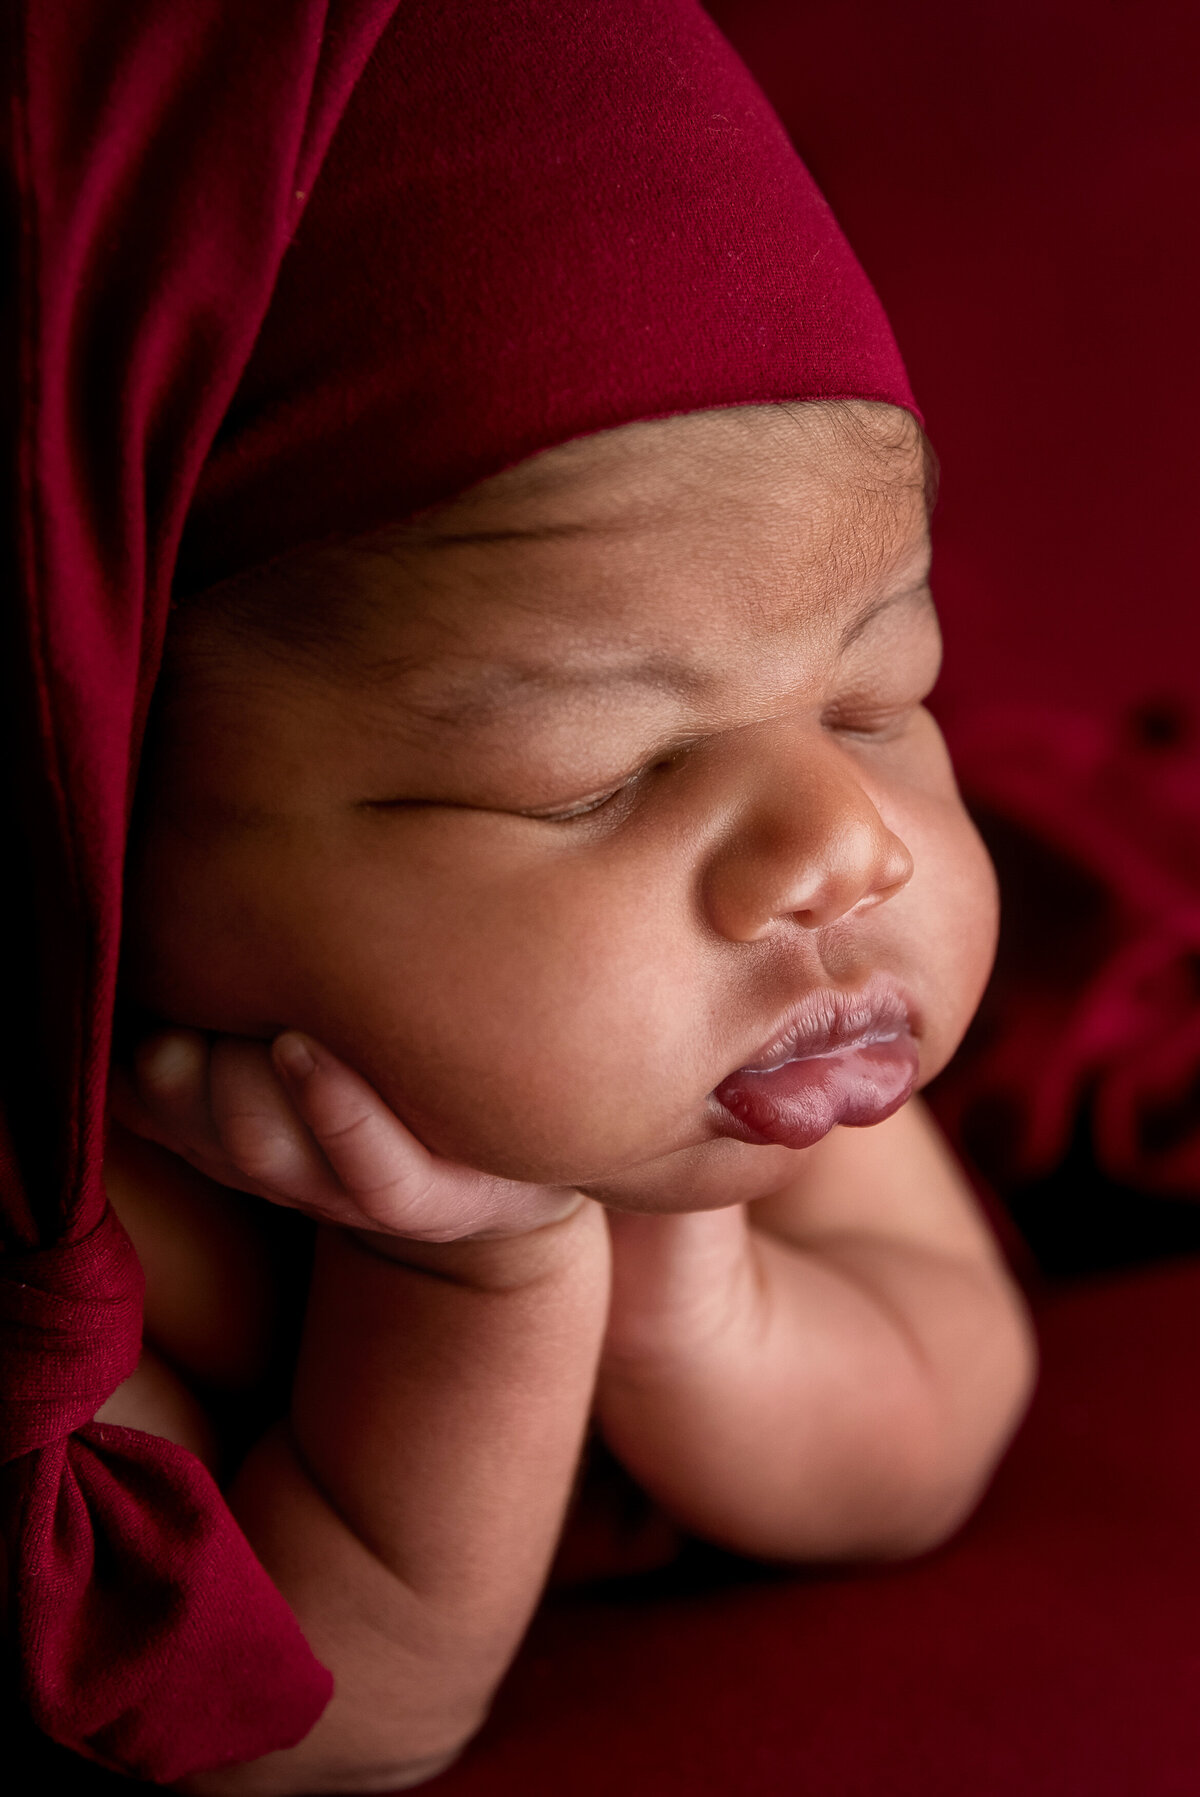 st-louis-newborn-photographer-sleeping-newborn-baby-holding-head-with-monocramatic-red-cap-and-background